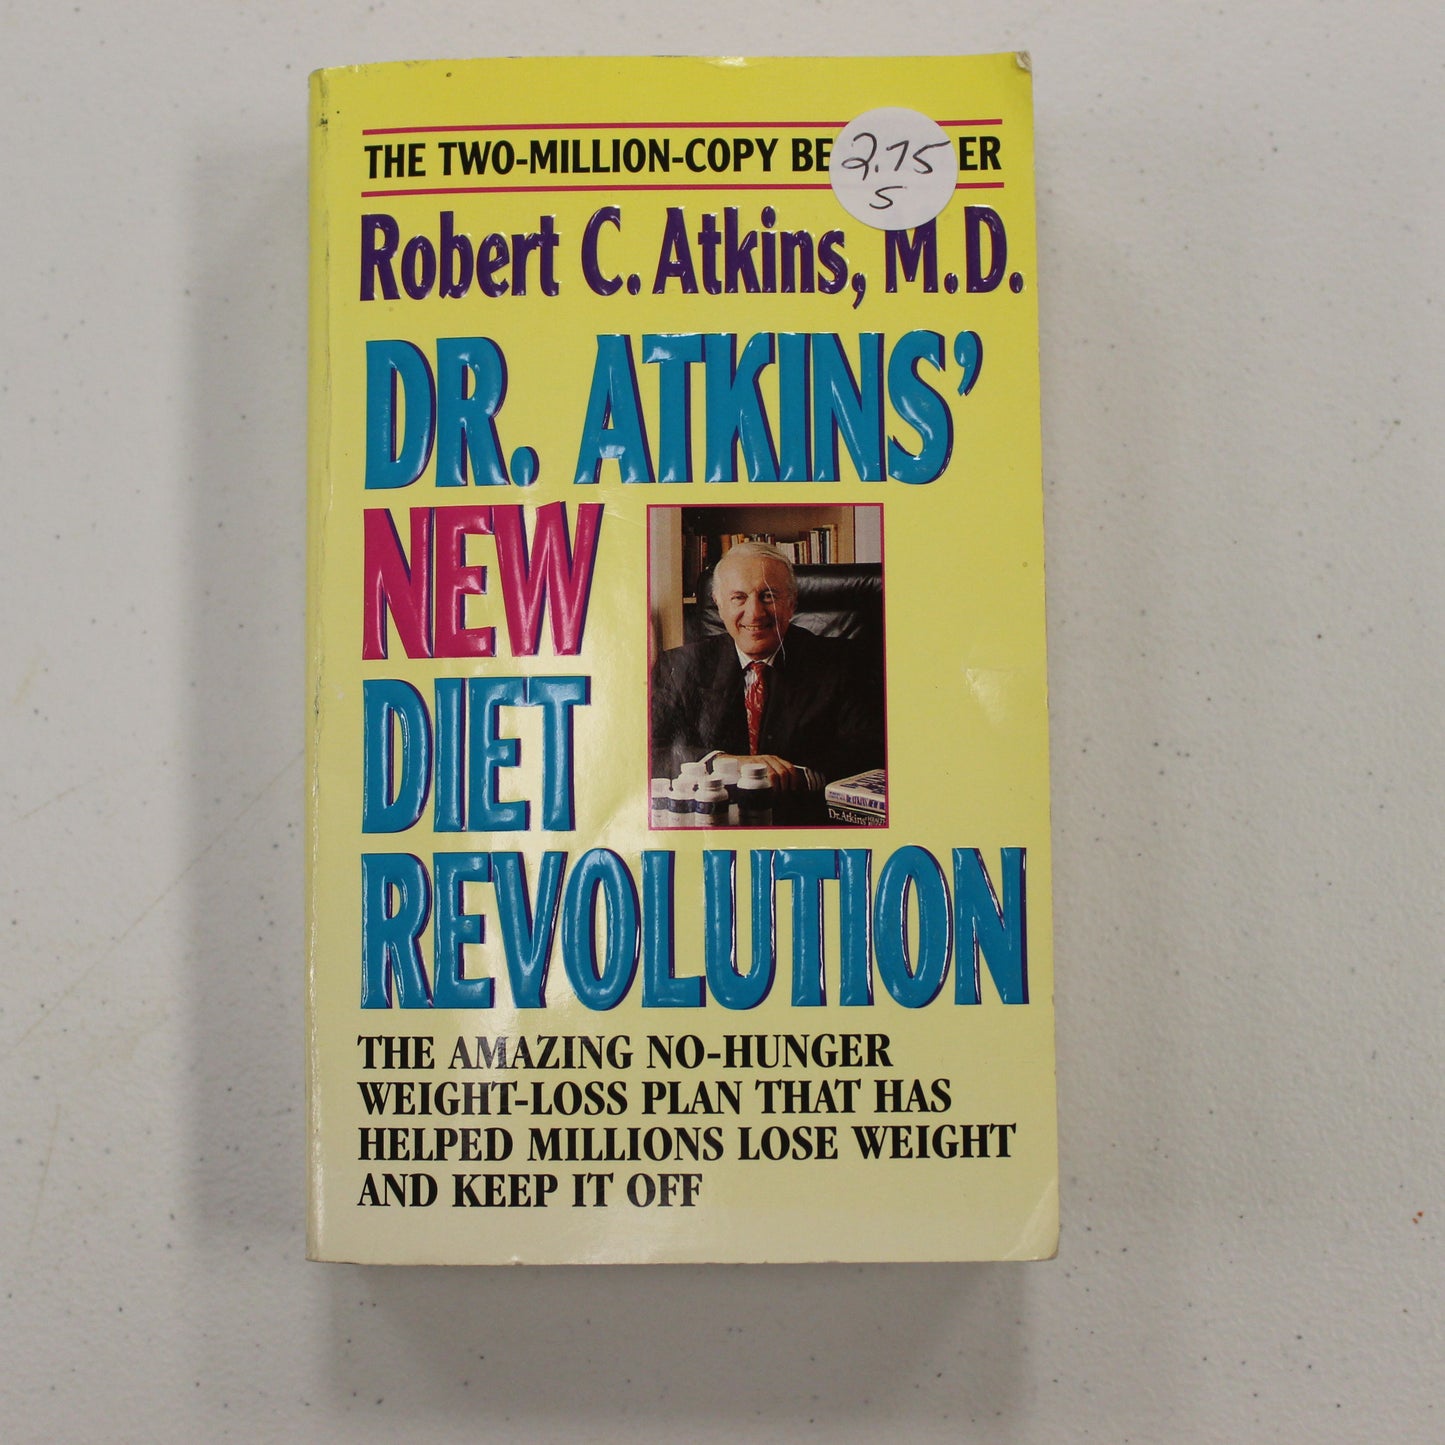 DR. ATKINS' NEW DIET REVOLUTION